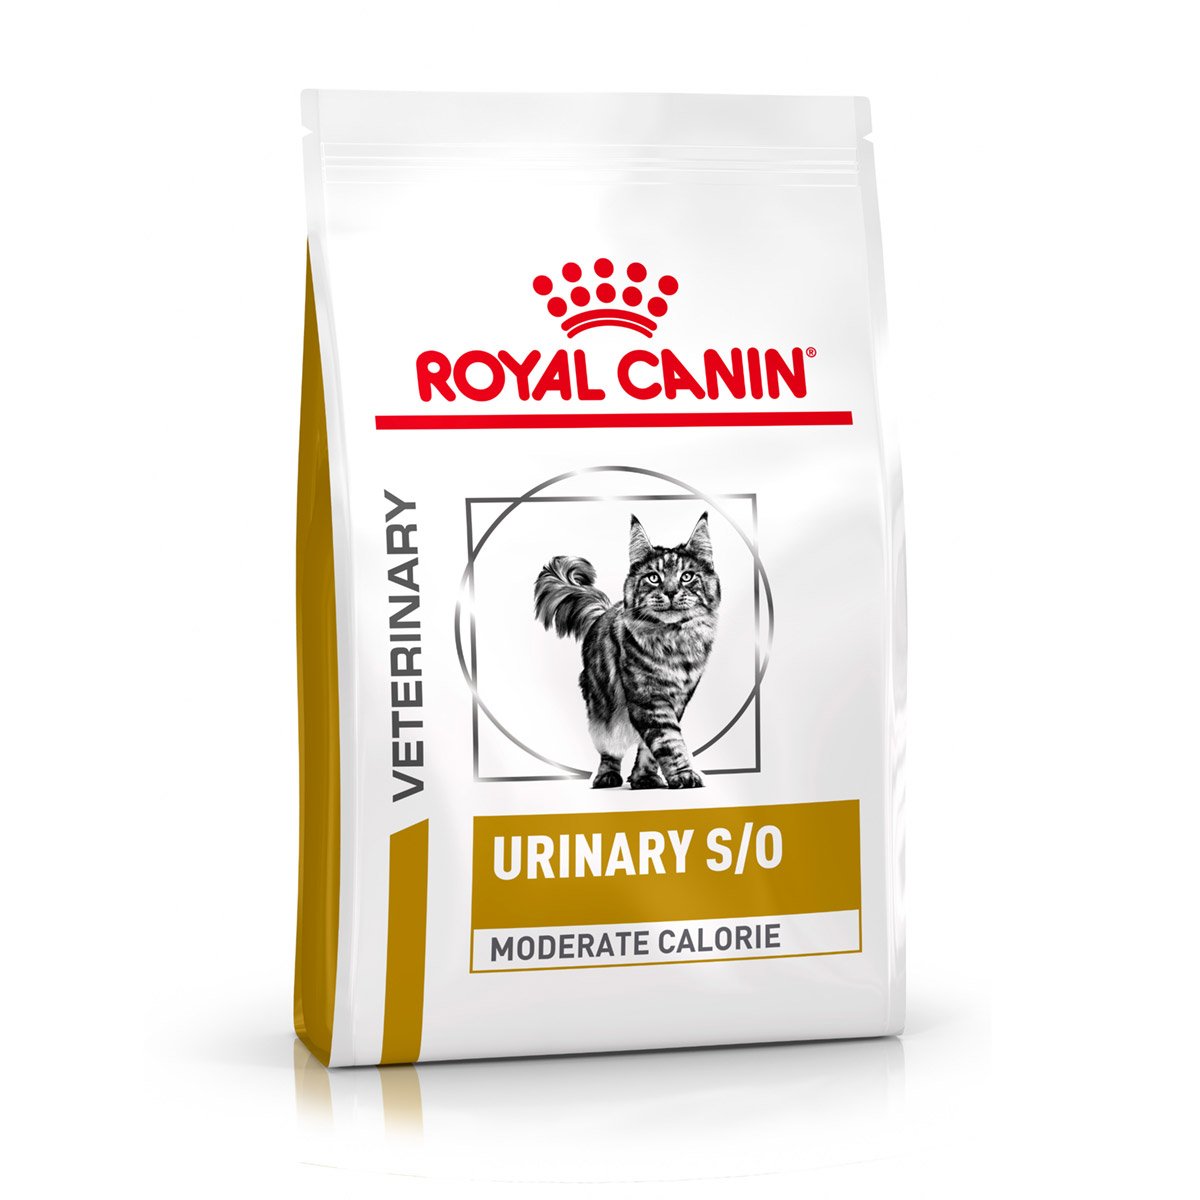 ROYAL CANIN® Veterinary URINARY S/O MODERATE CALORIE Trockenfutter für Katzen 400g von Royal Canin